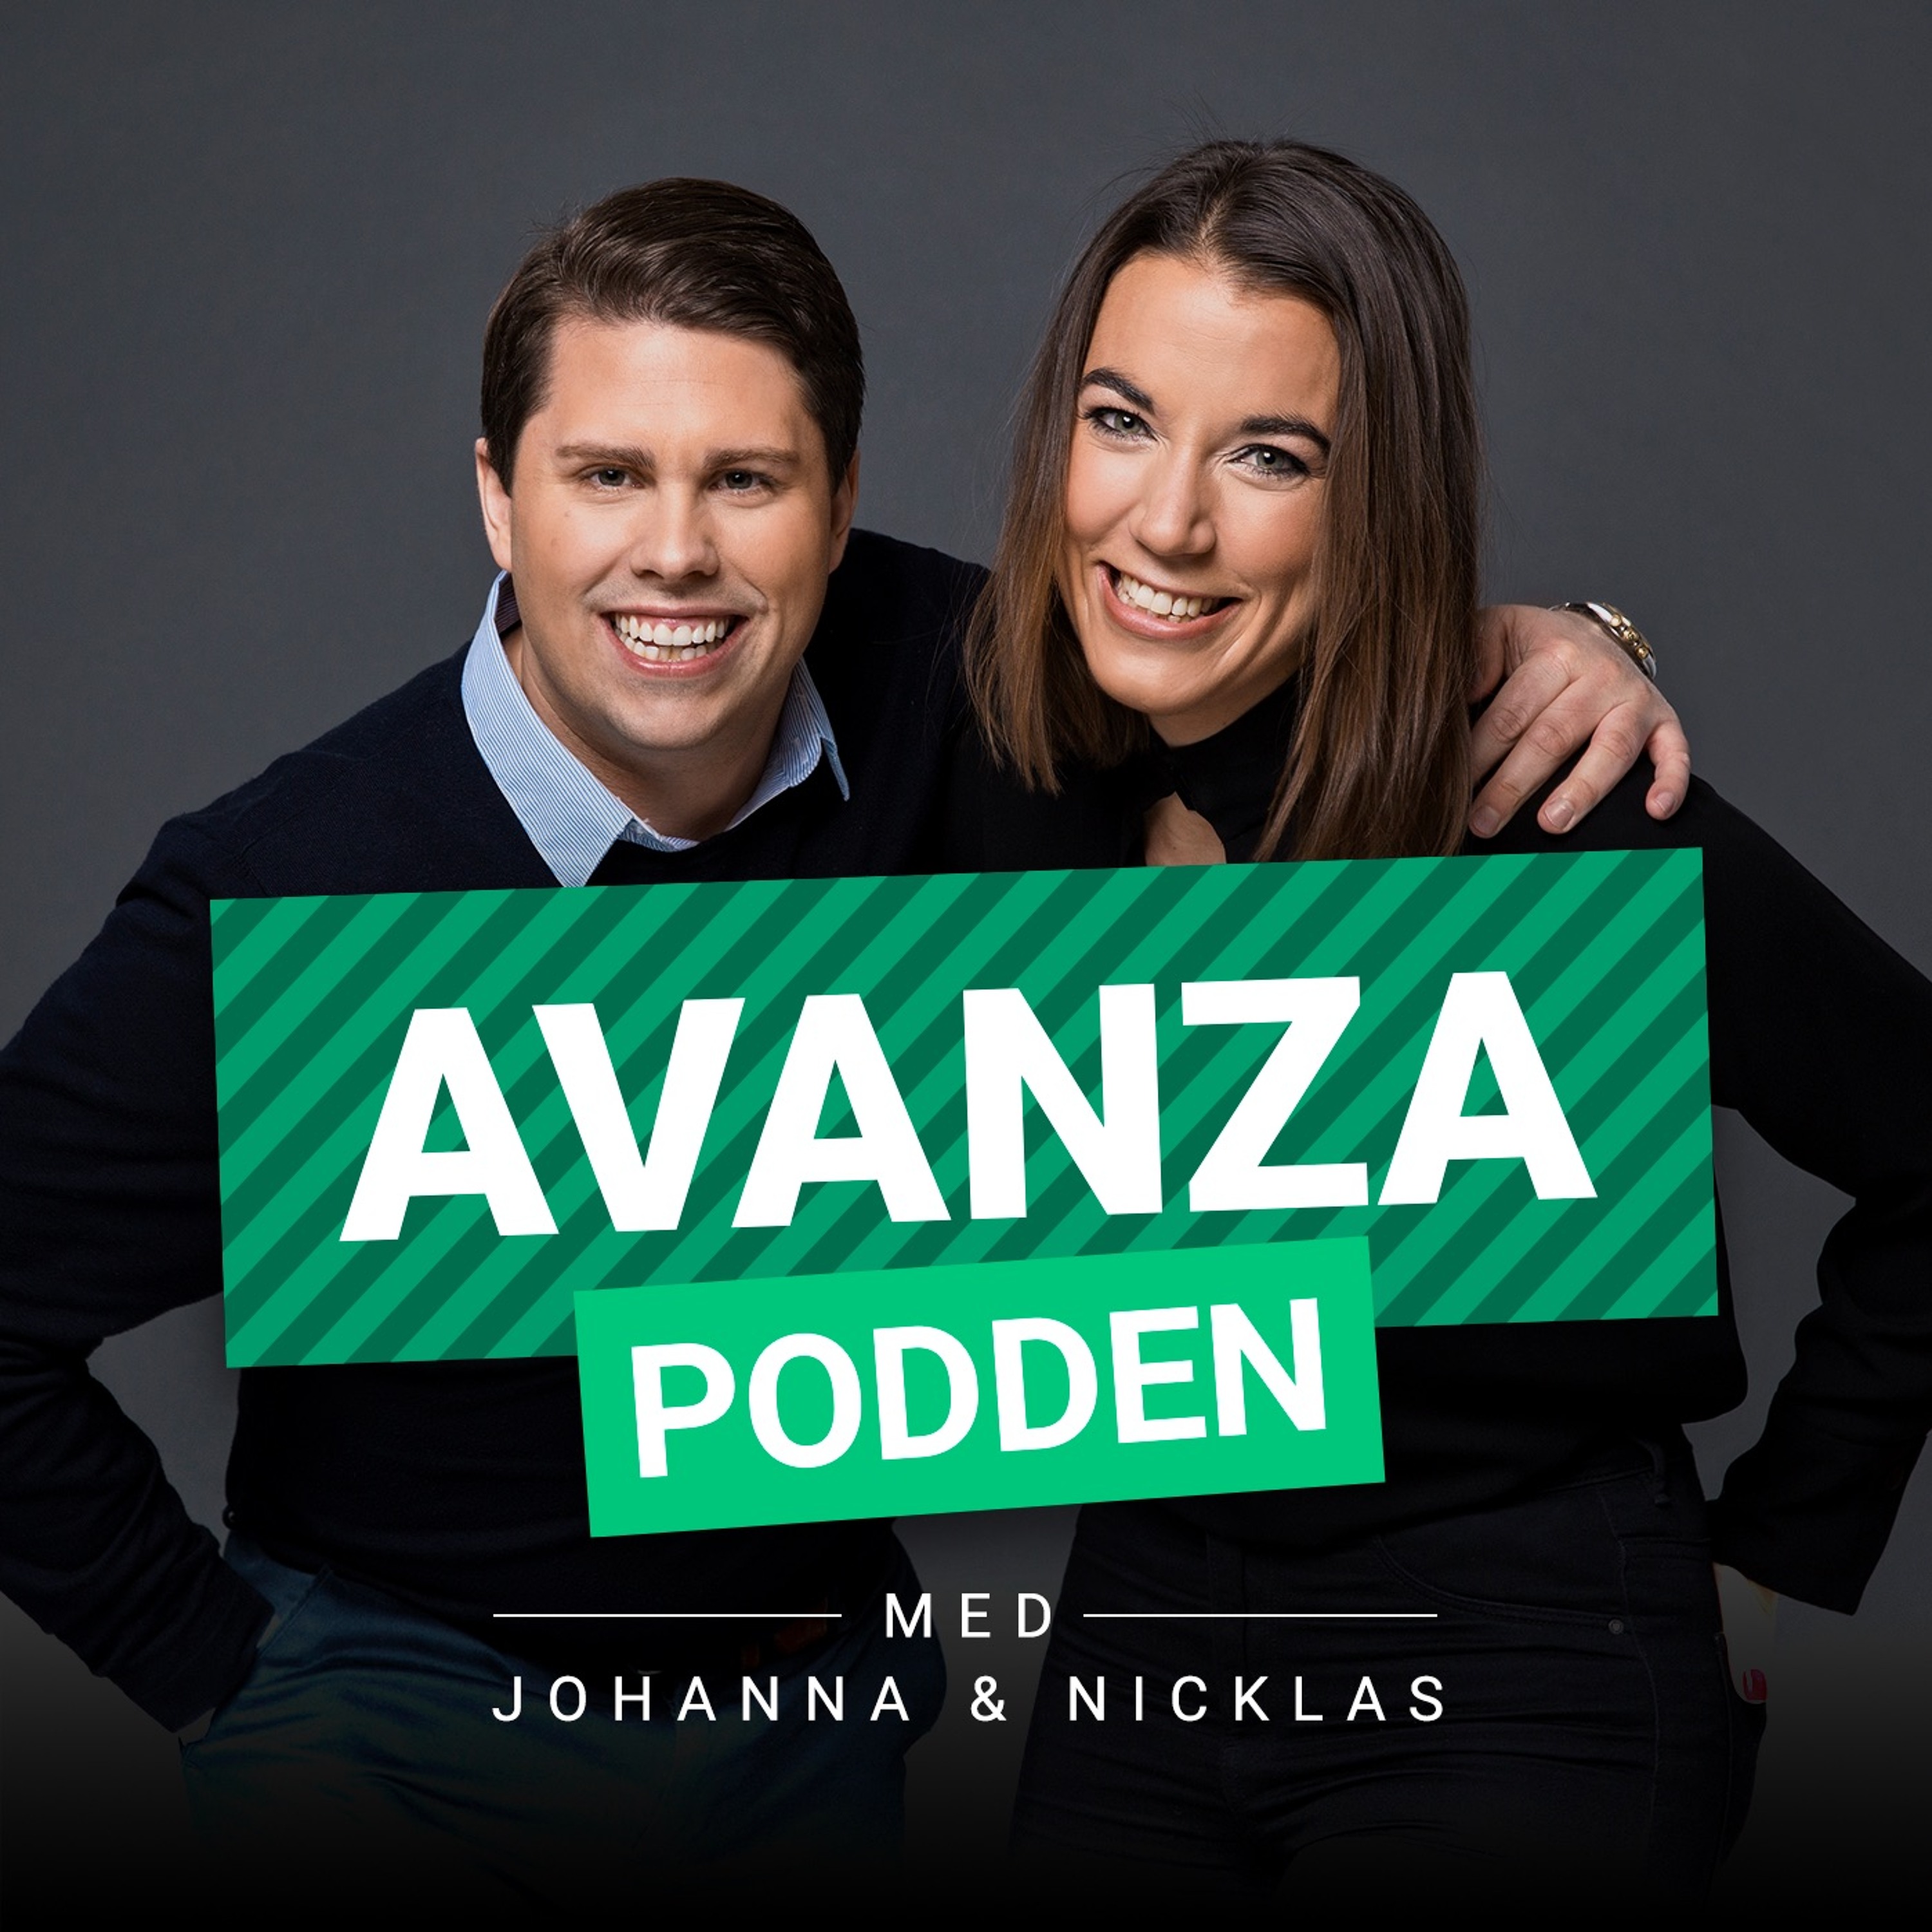 Episod 216 - Avanza Småbolag by Skoglund firar 1 år idag!